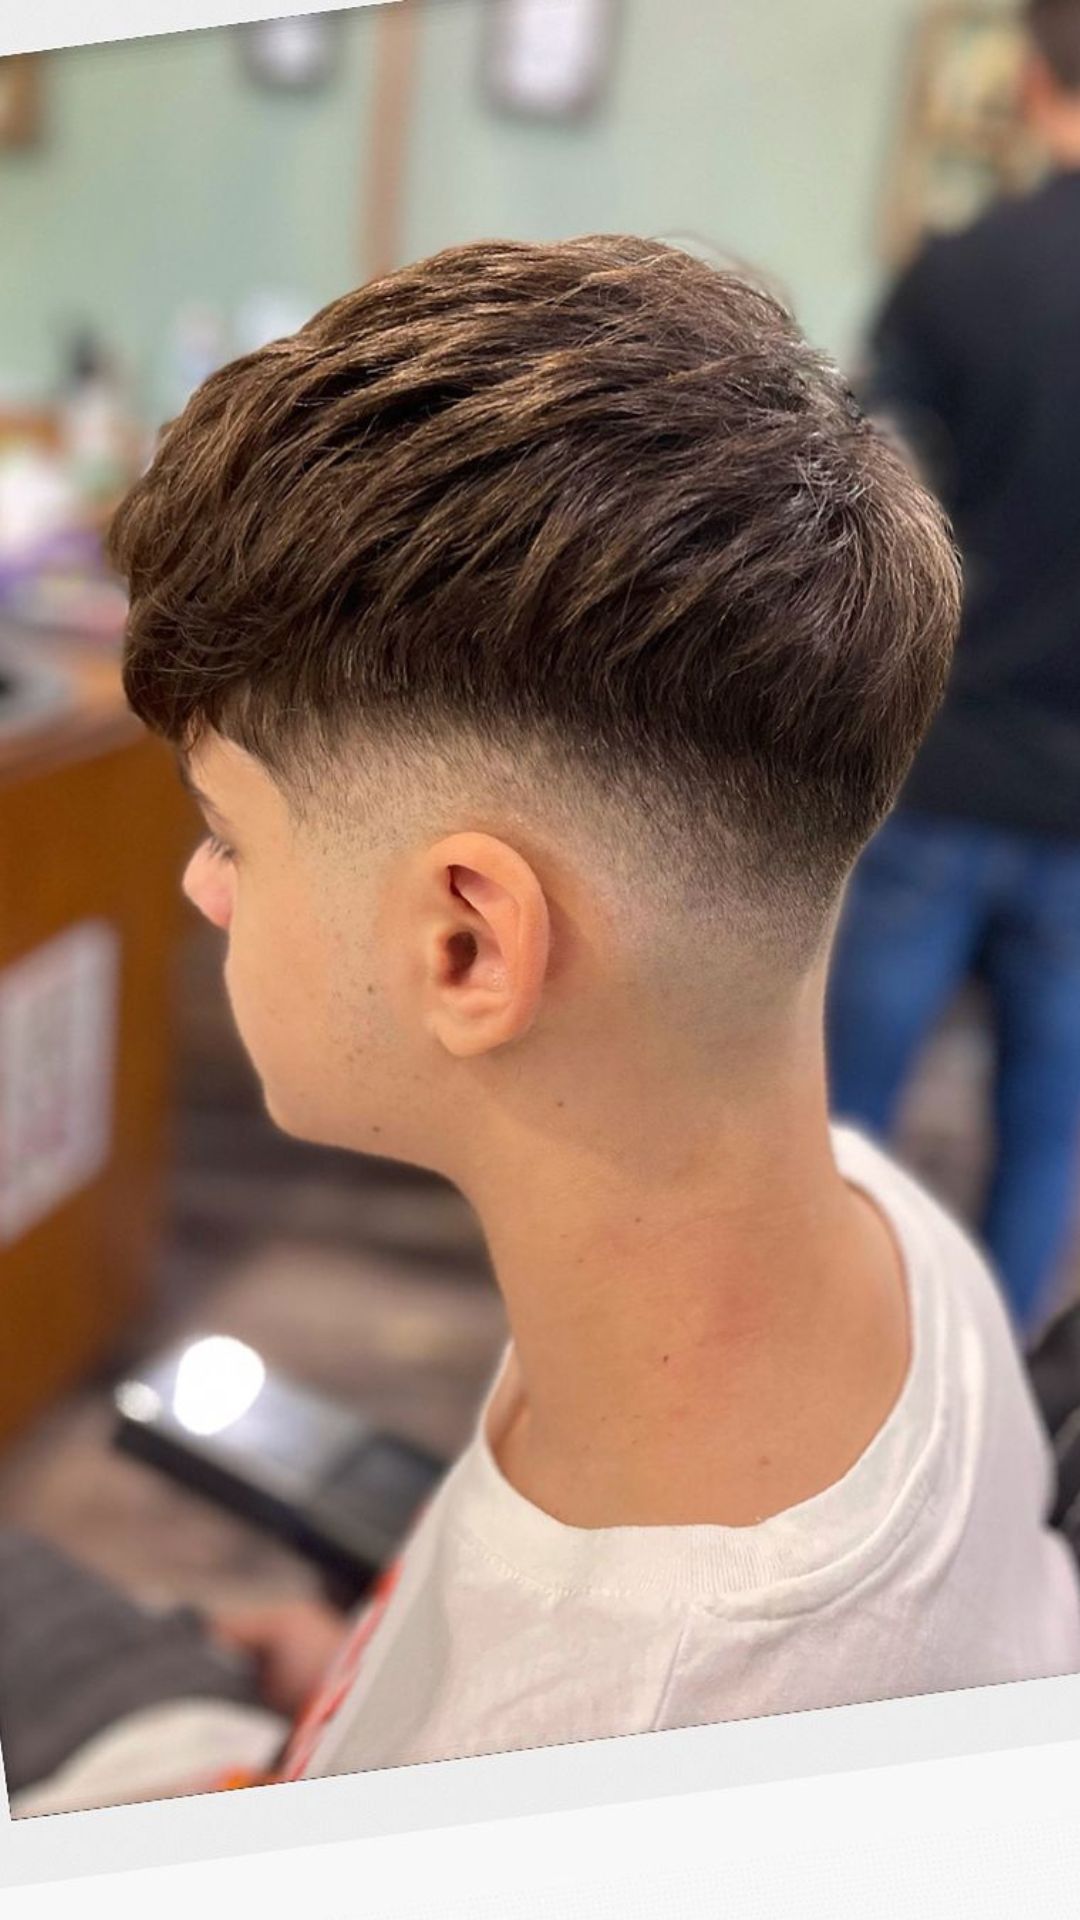 A teenage boy with a textured crop hair.